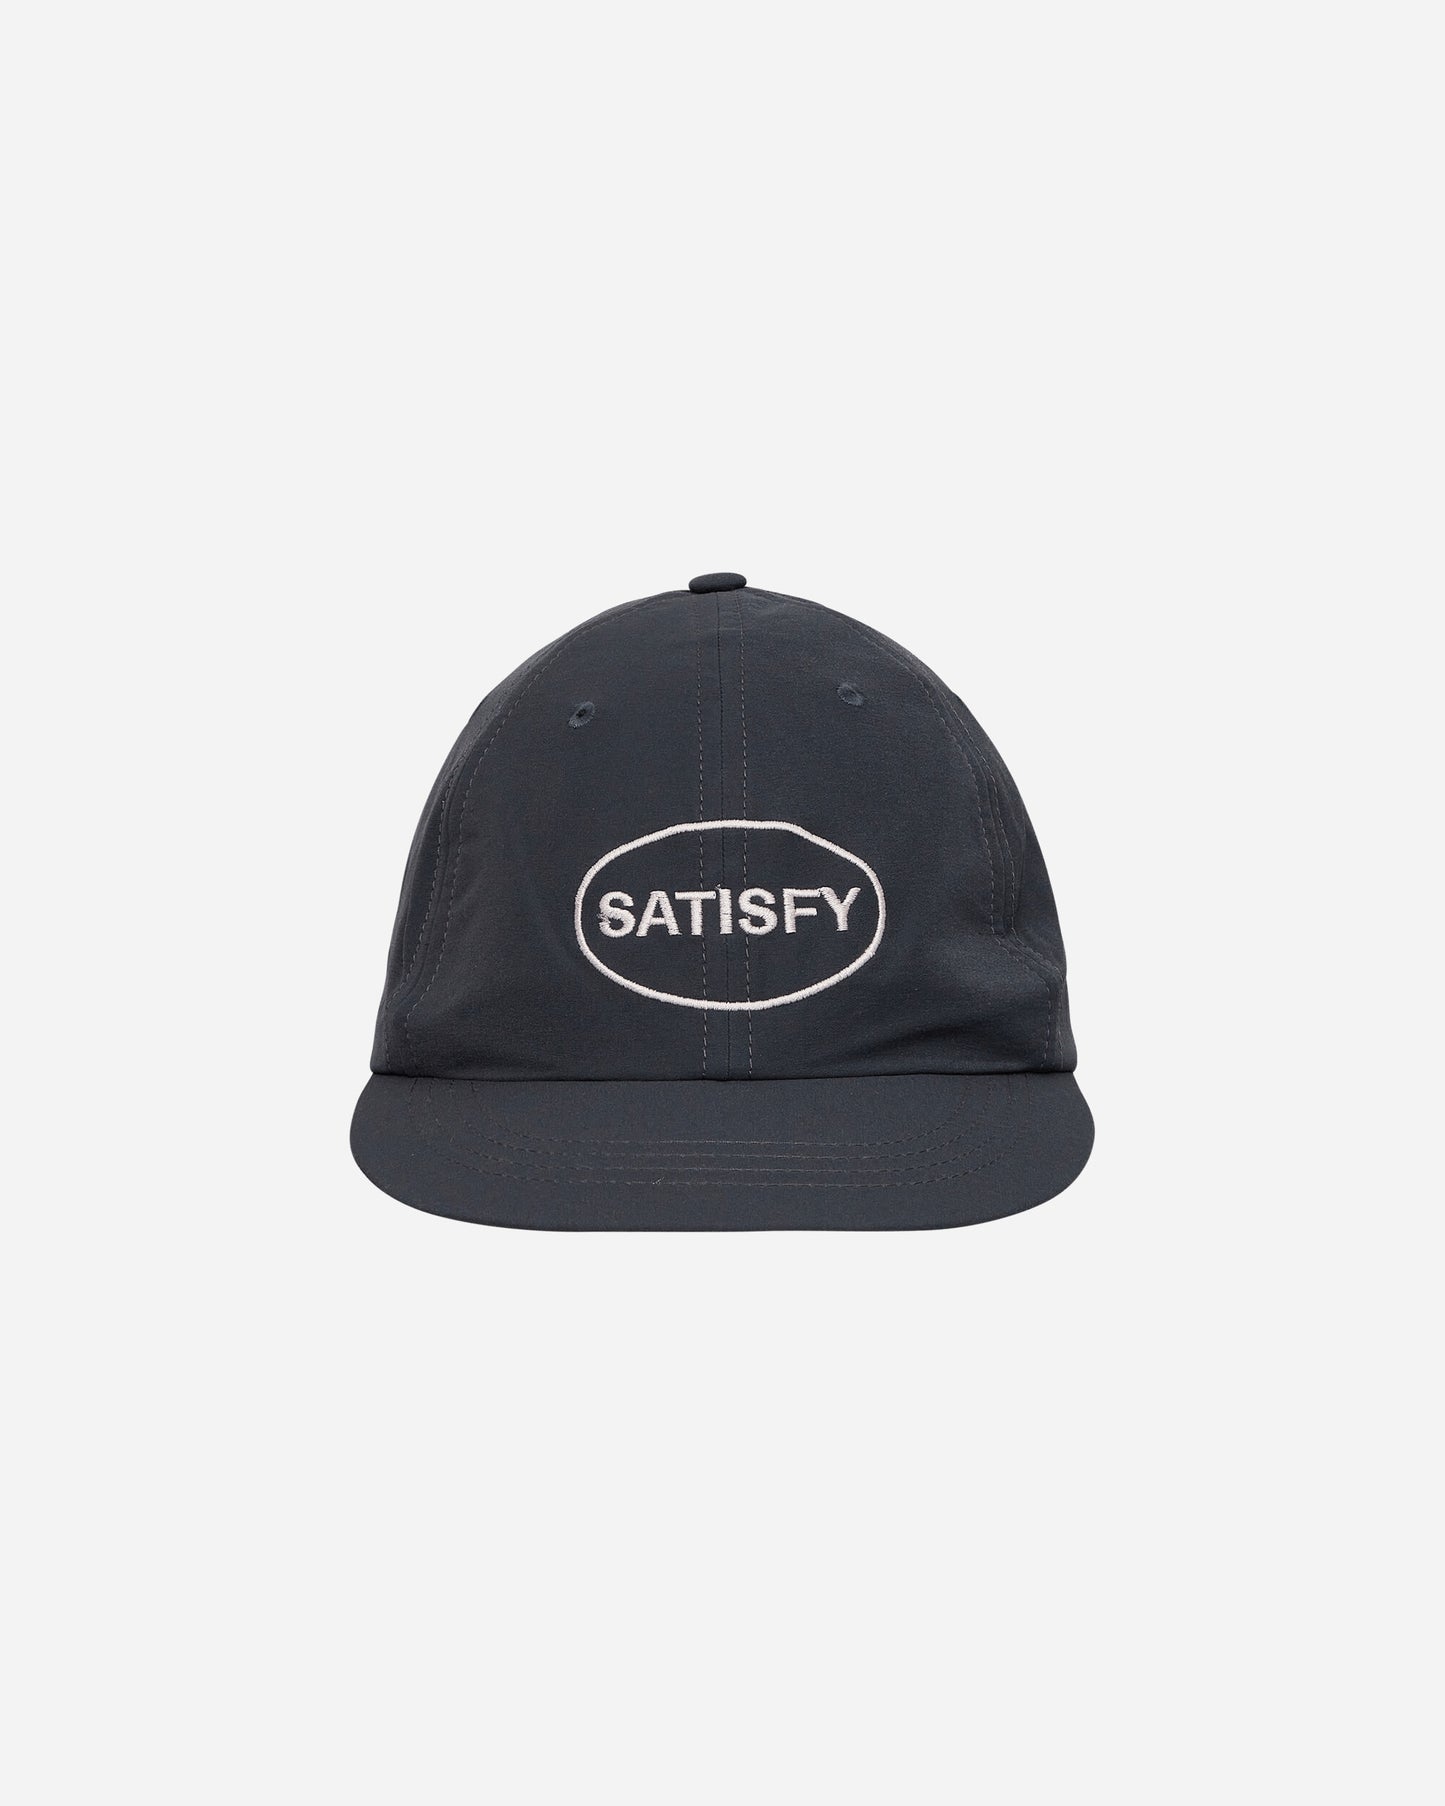 Satisfy Peaceshell Running Cap Charcoal Hats Caps 5115 CH-OV